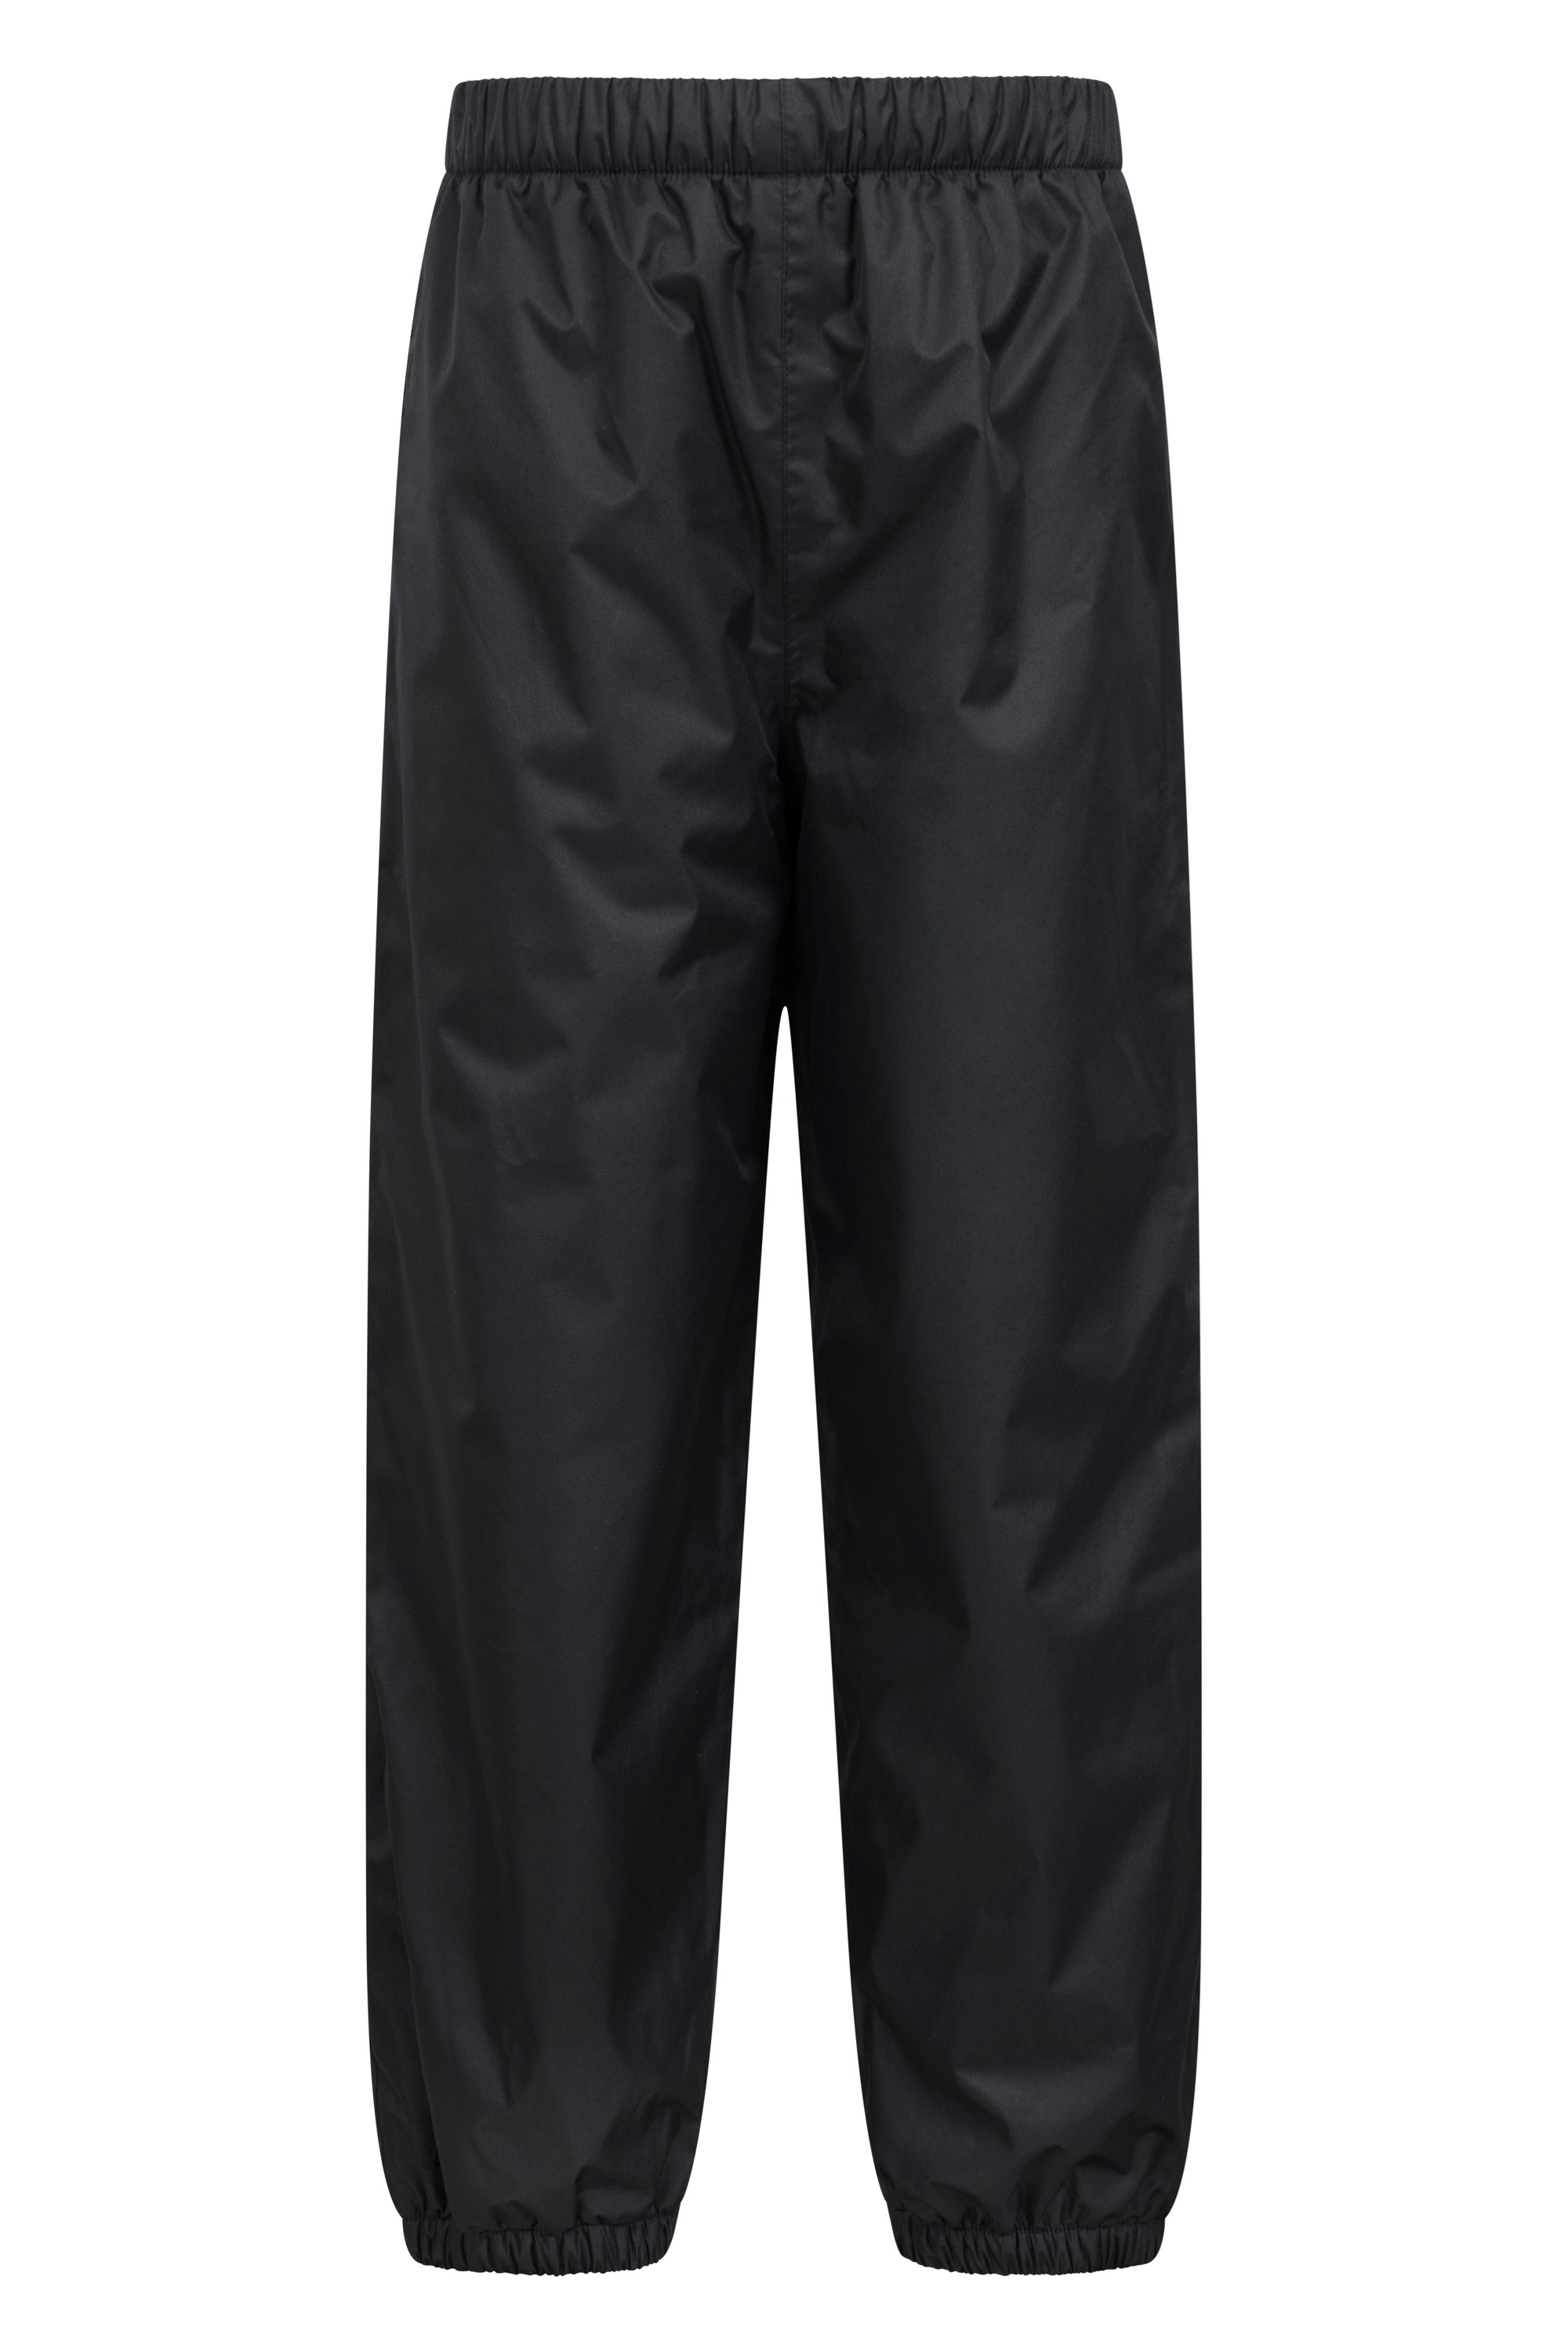 Gale Waterproof Rain Pant | HH Workwear CZ | HH Workwear